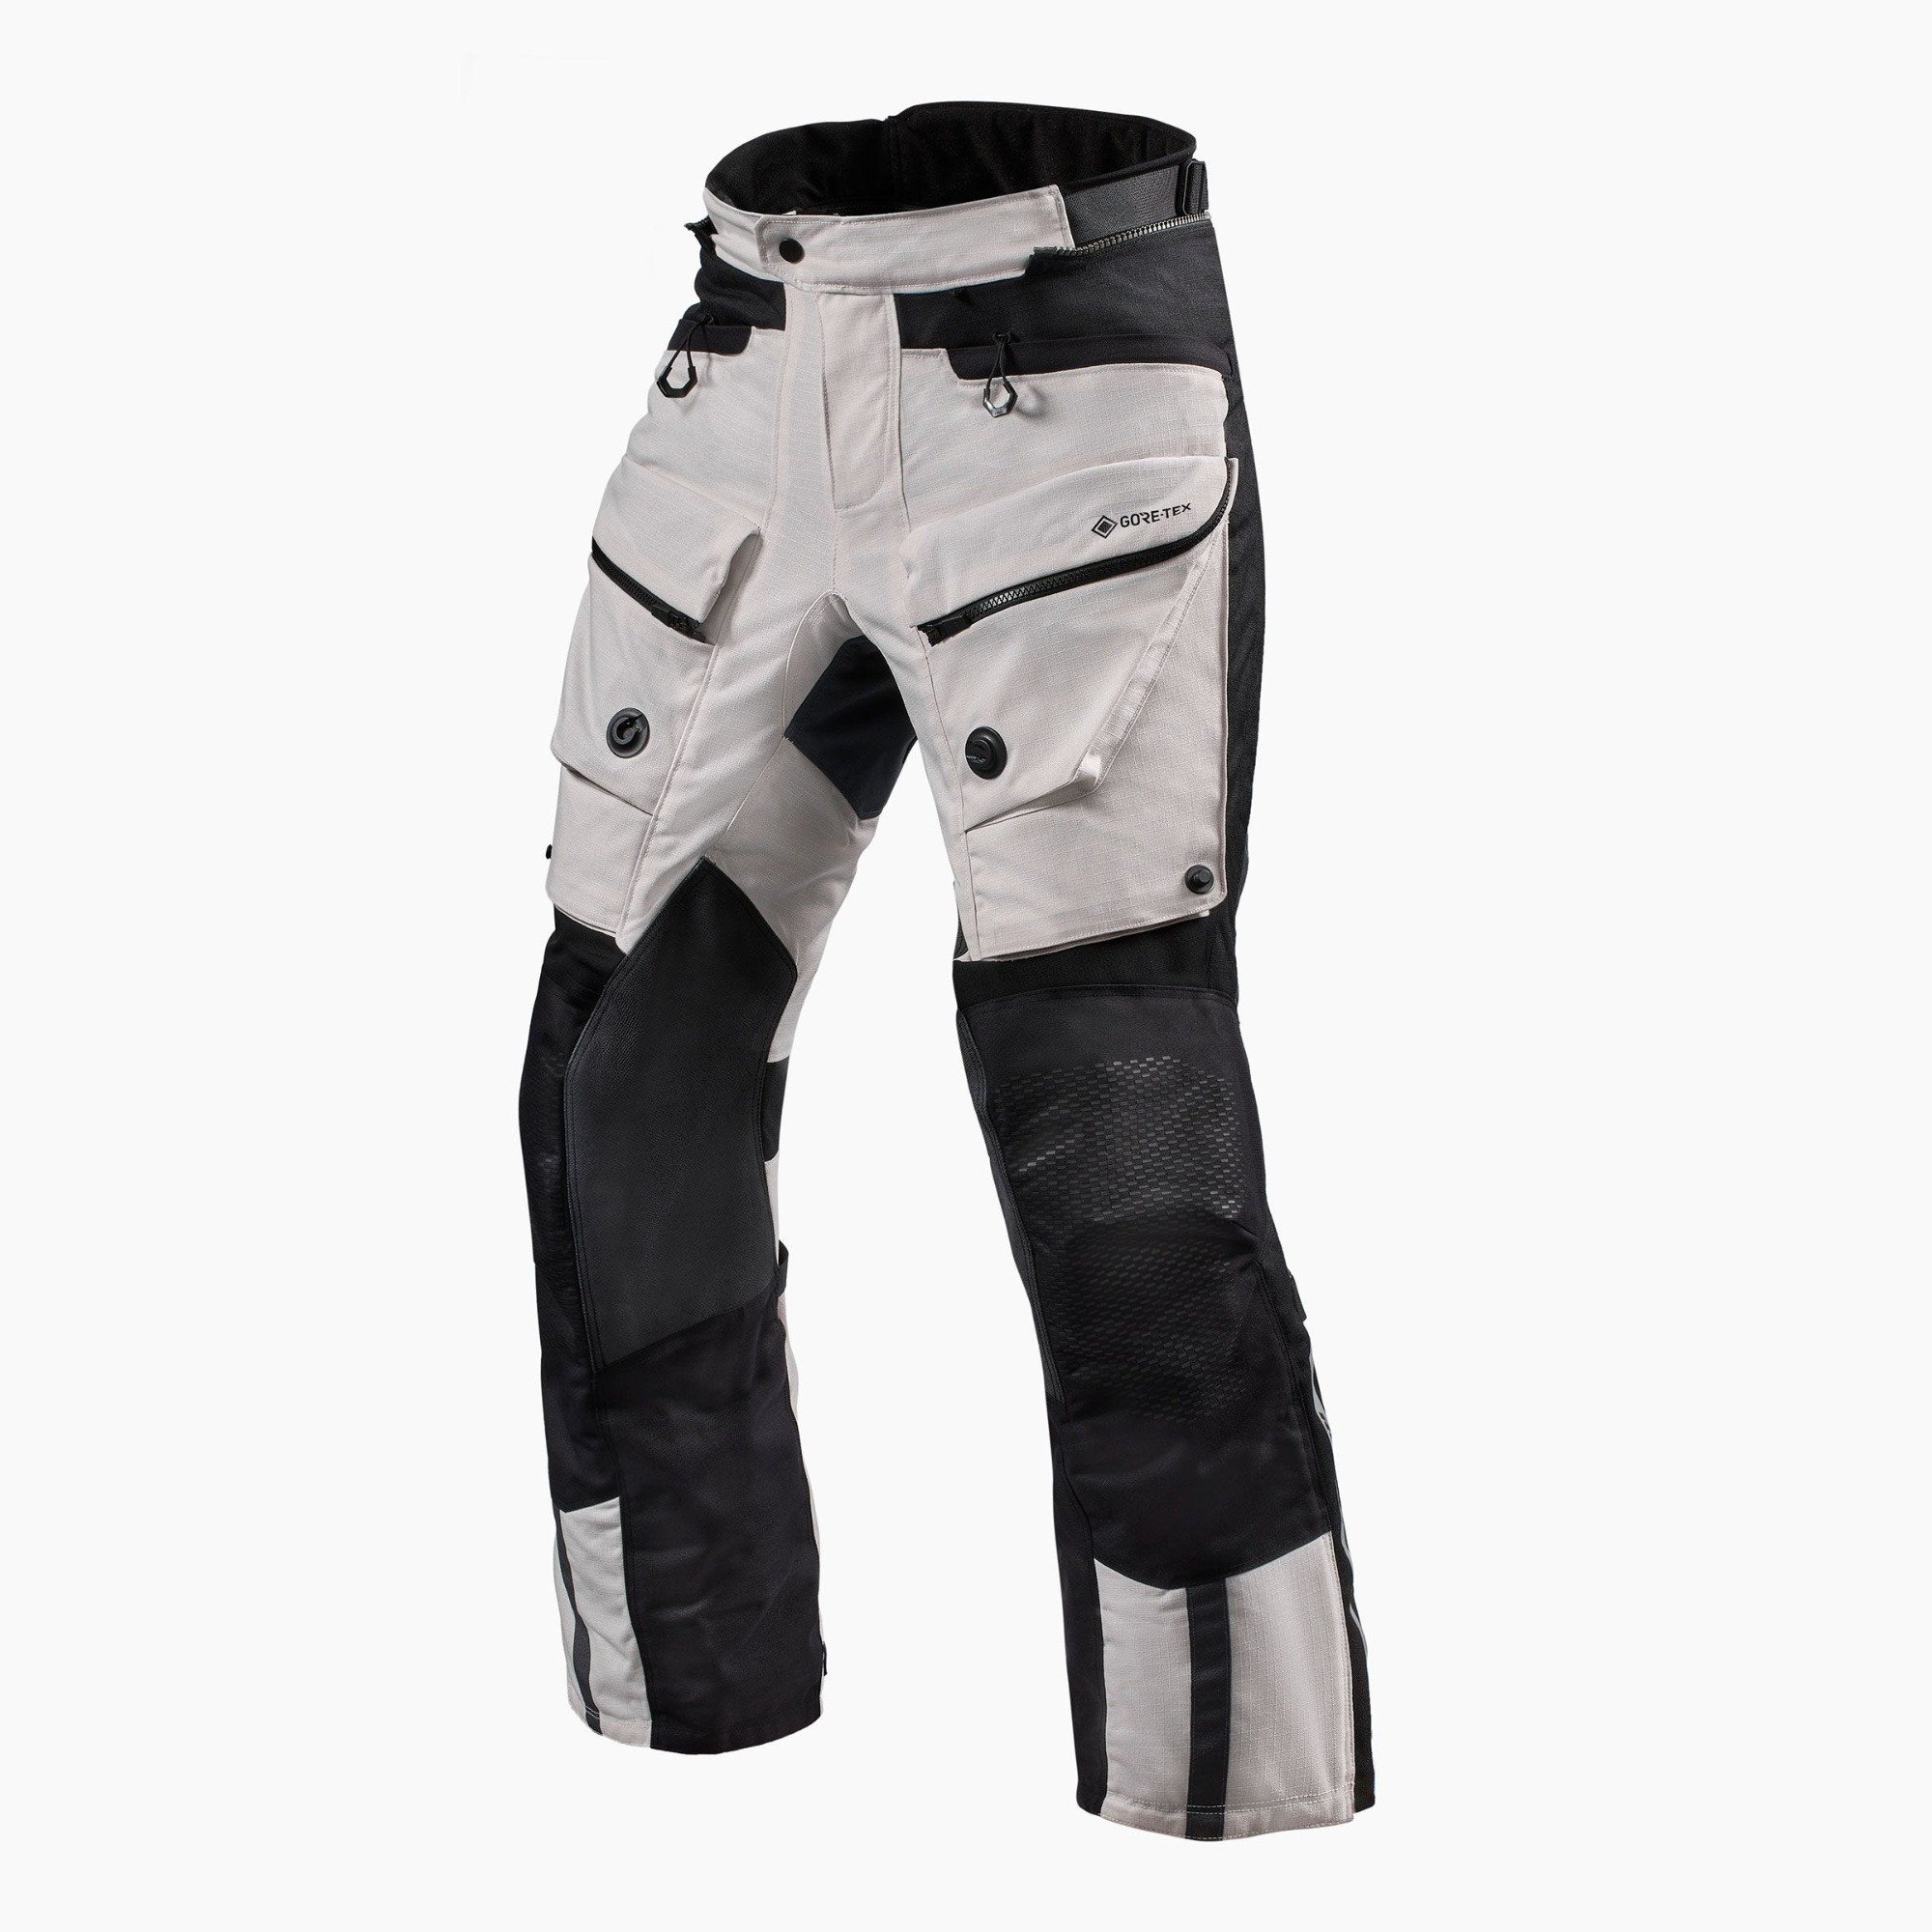 Image of REV'IT! Trousers Defender 3 GTX Silver Black Standard Motorcycle Pants Talla L